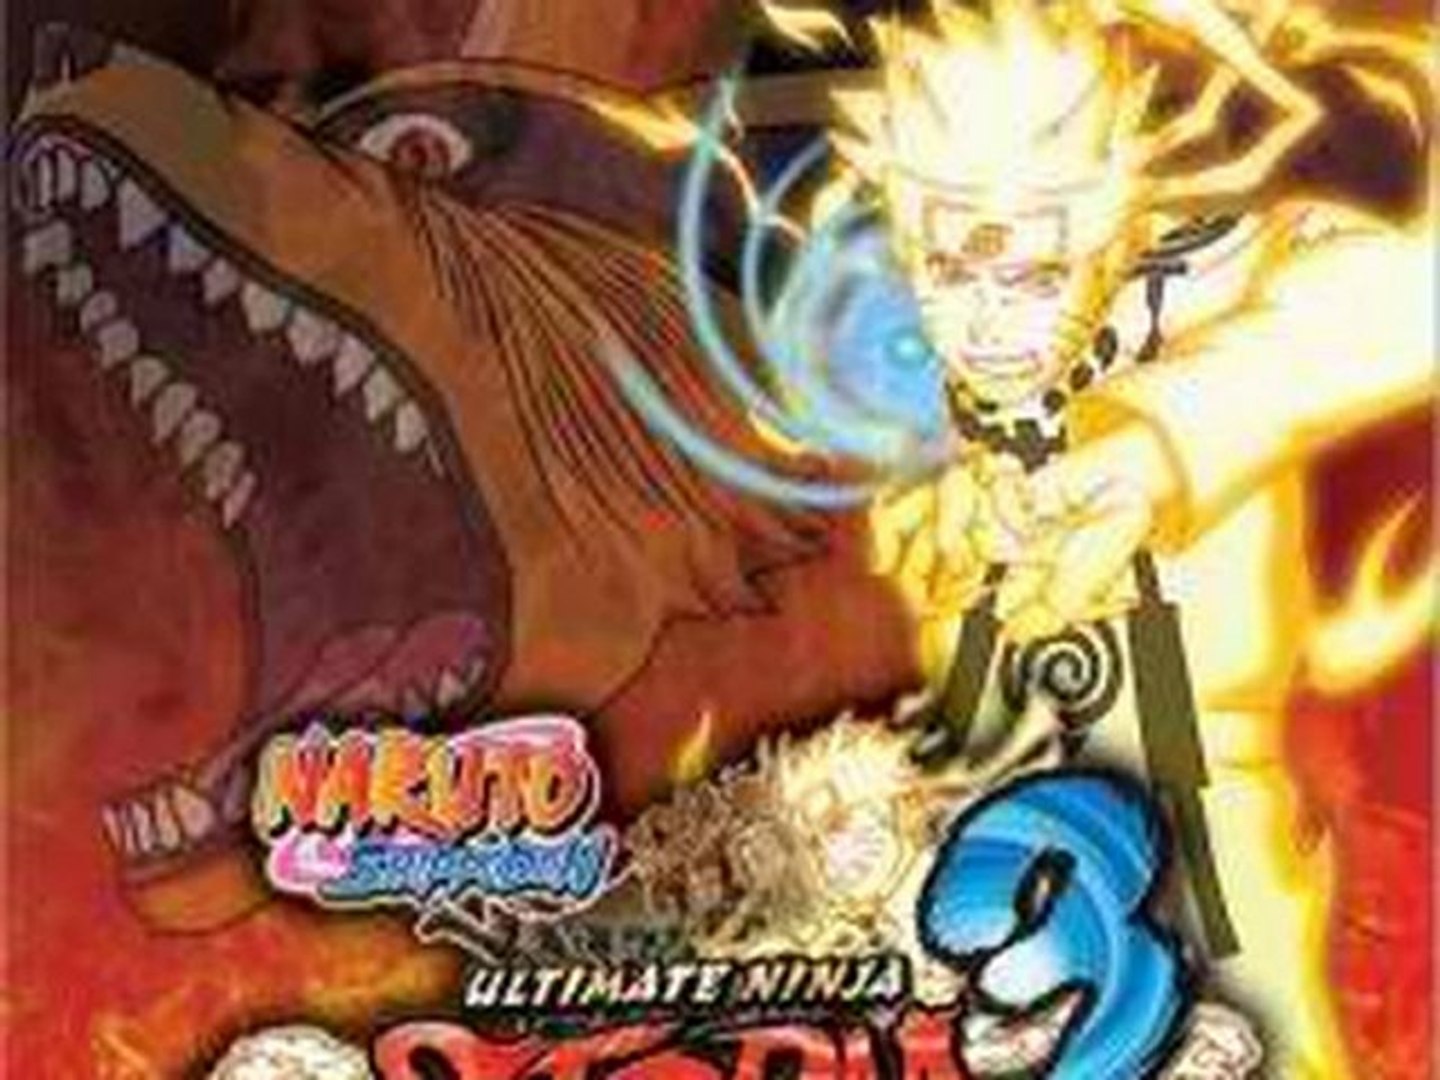 Naruto Shippuden: Ultimate Ninja Storm Generations ROM & ISO - PS3